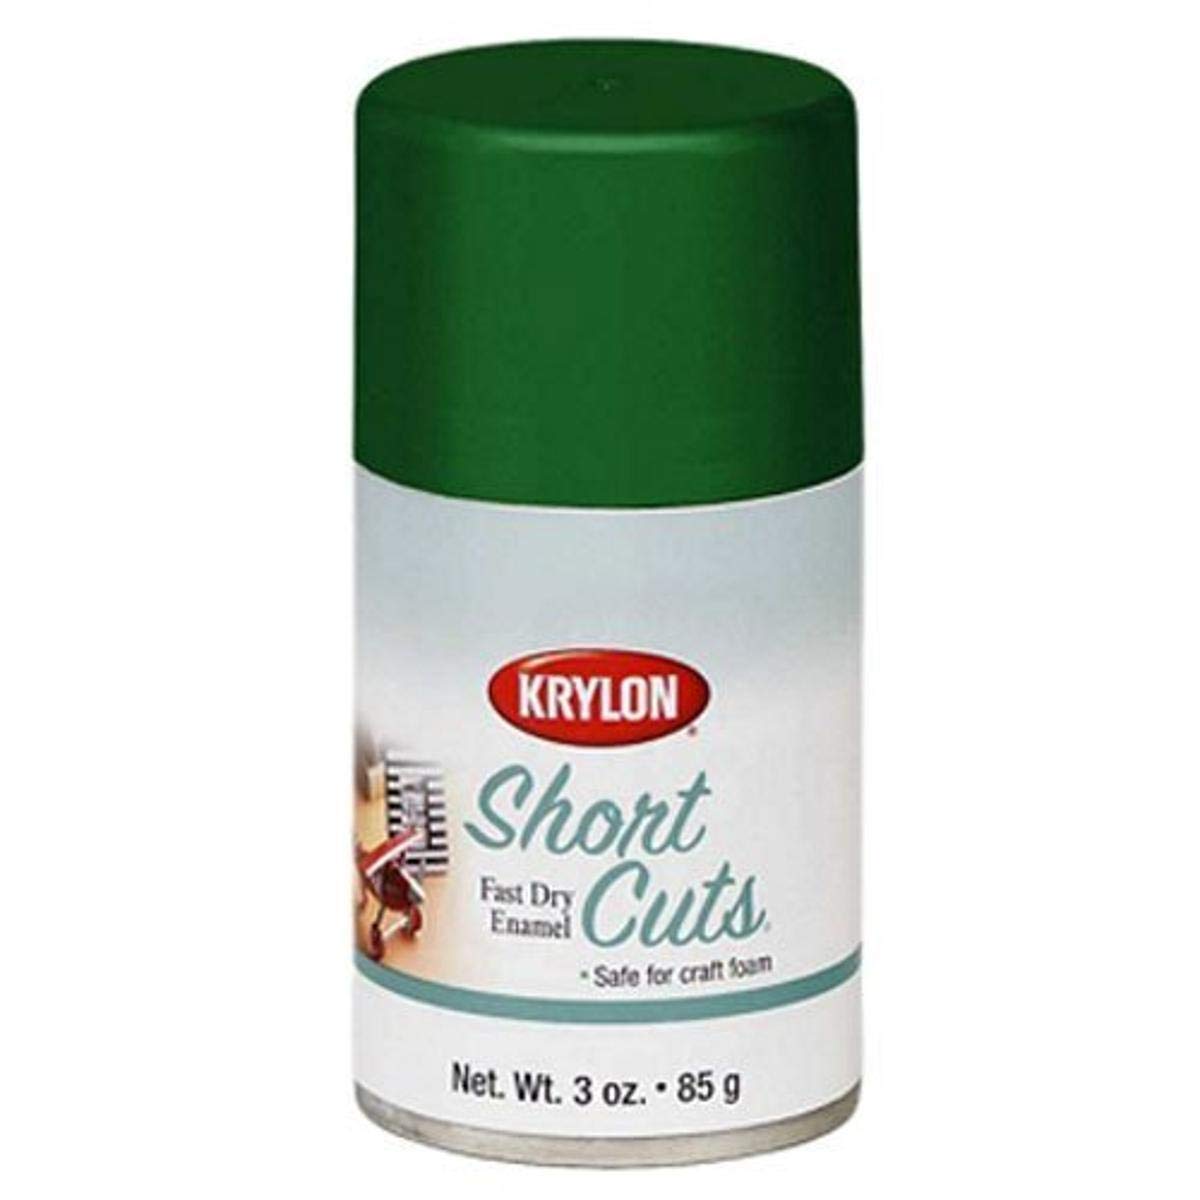 Krylon Kscs046 Short Cuts Aerosol Spray Paint, Gloss Leaf Green, 3 Ounce